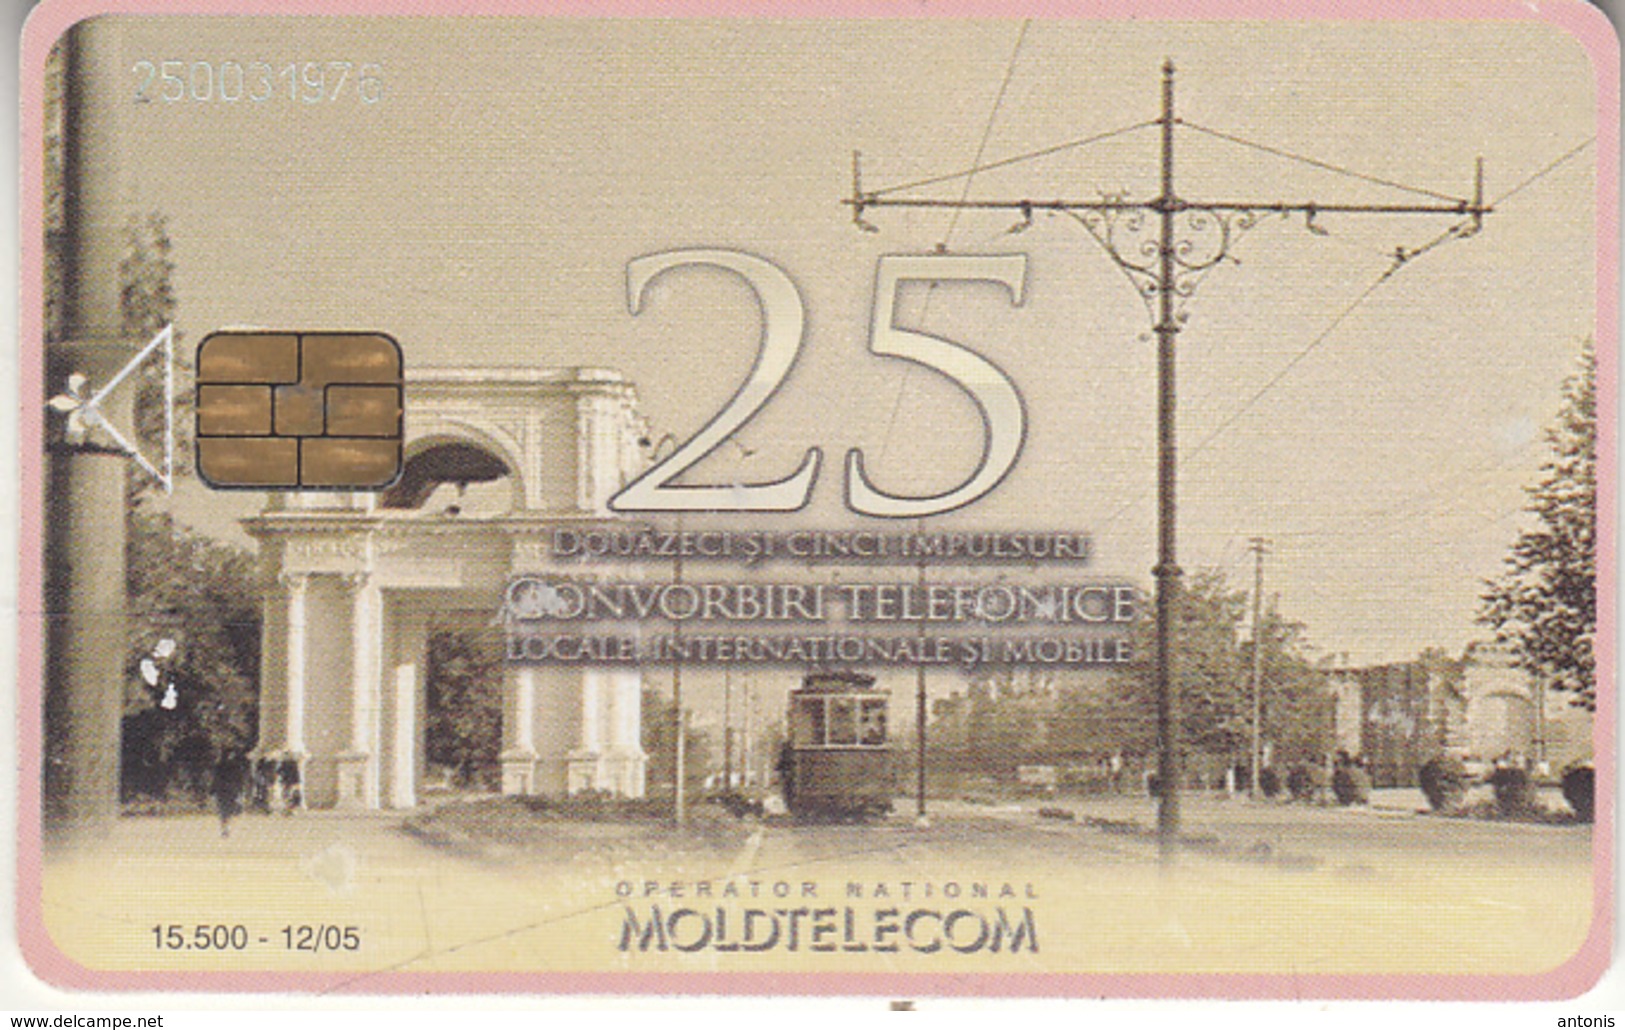 MOLDOVA - Strada Alexandru Cel Bun, Moldtelecom Telecard 25 Units, Tirage 15500, 12/05, Used - Landscapes